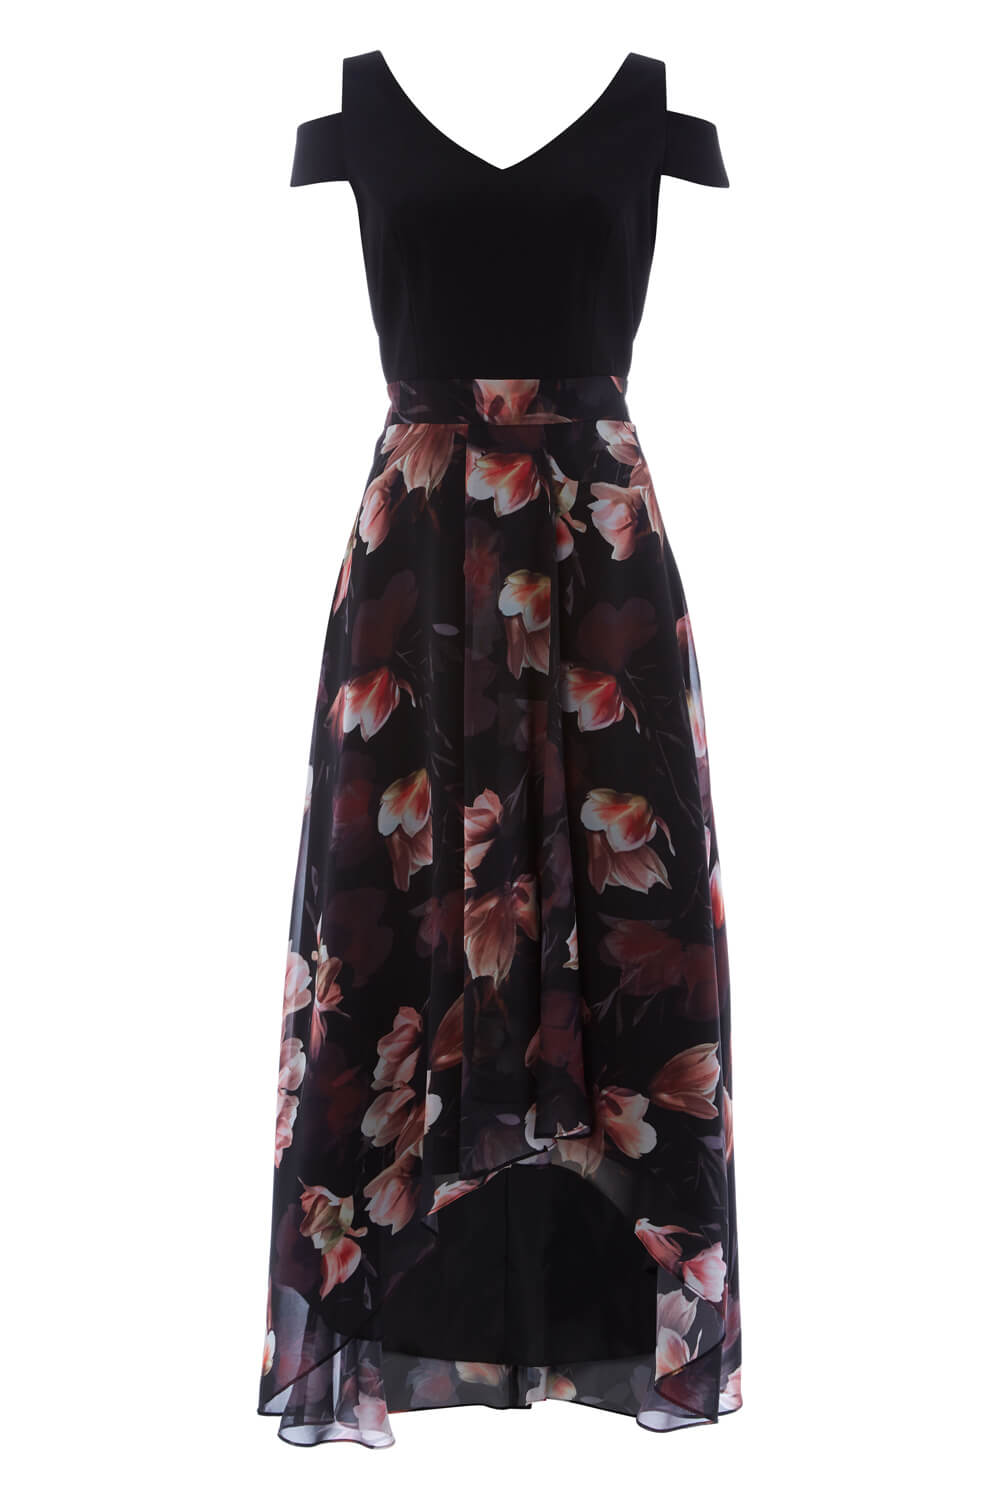 Plum Floral Print Cold Shoulder Maxi Dress, Image 3 of 3